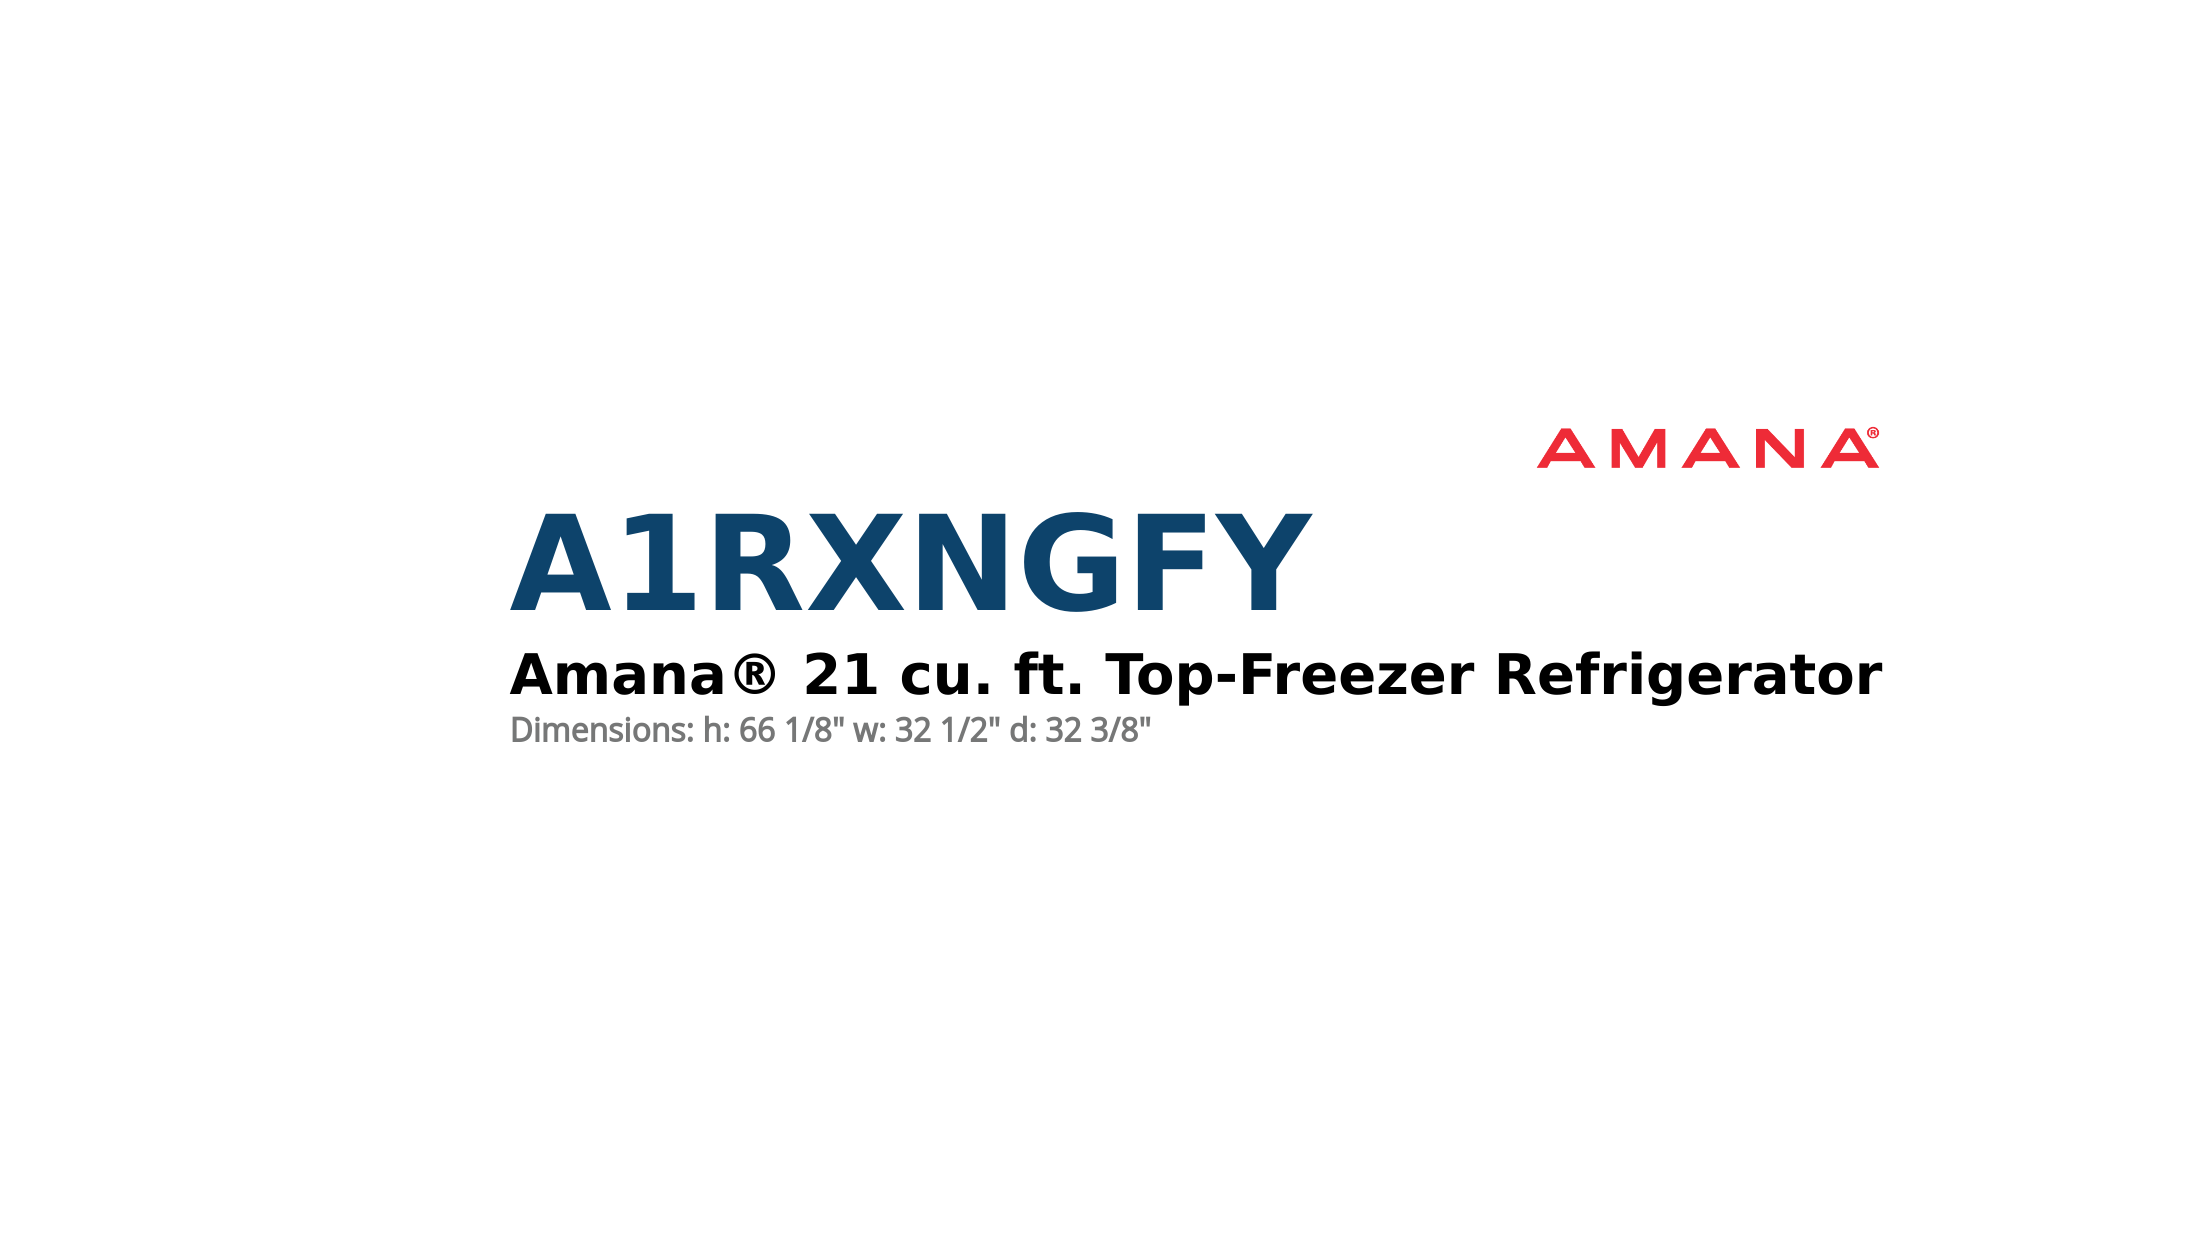 AMANA® 21 CU. FT. TOP-FREEZER REFRIGERATOR